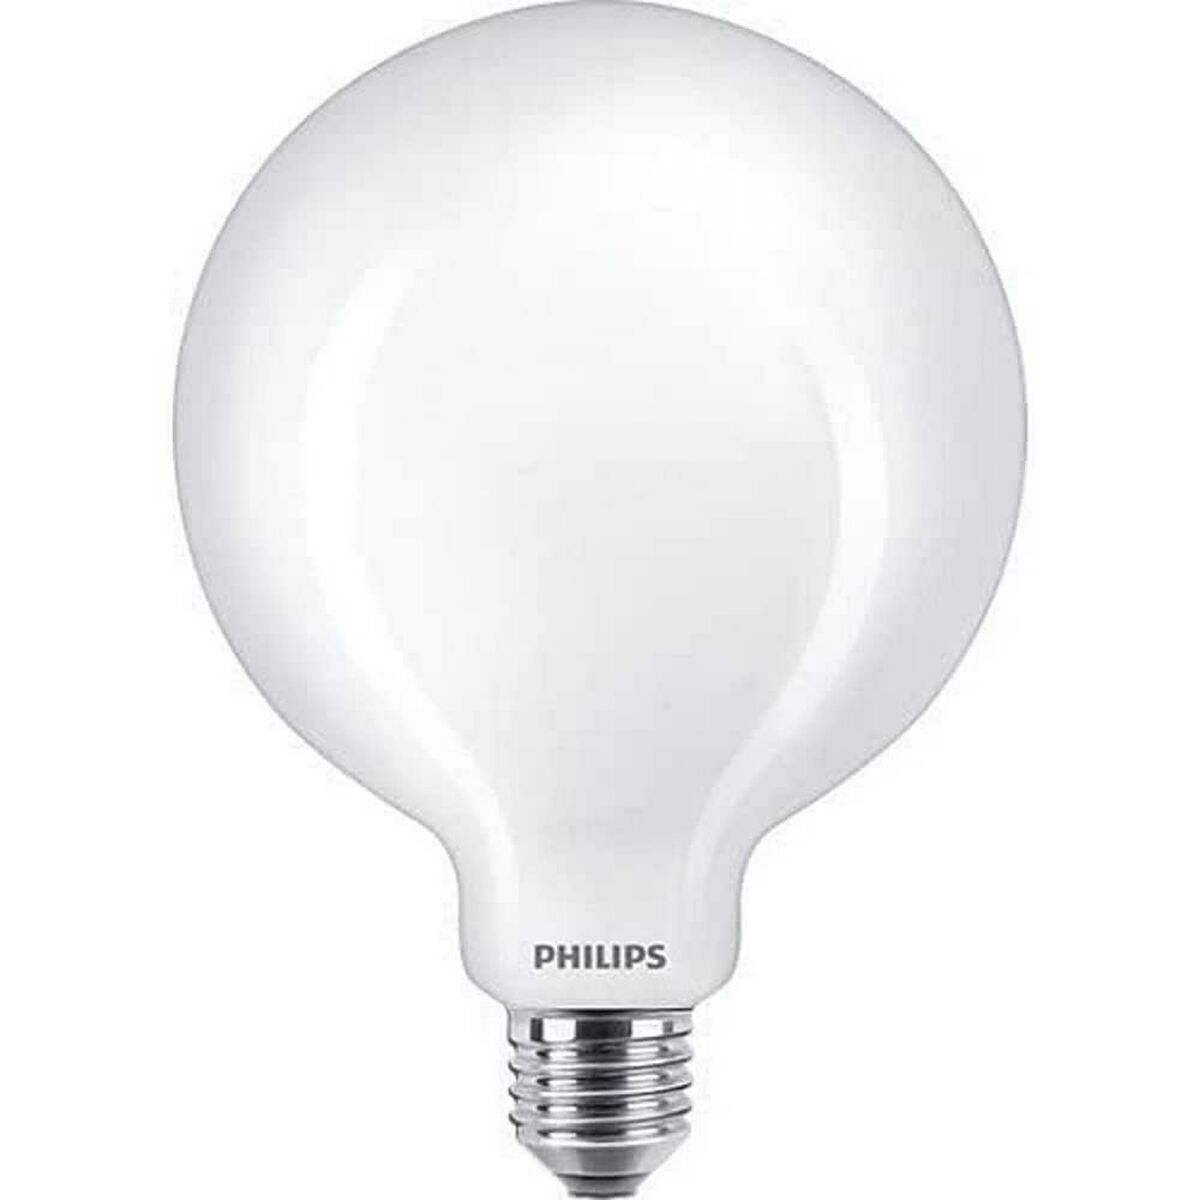 Ledlamp Philips 929002067901 E27 60 W Wit (Refurbished A+)